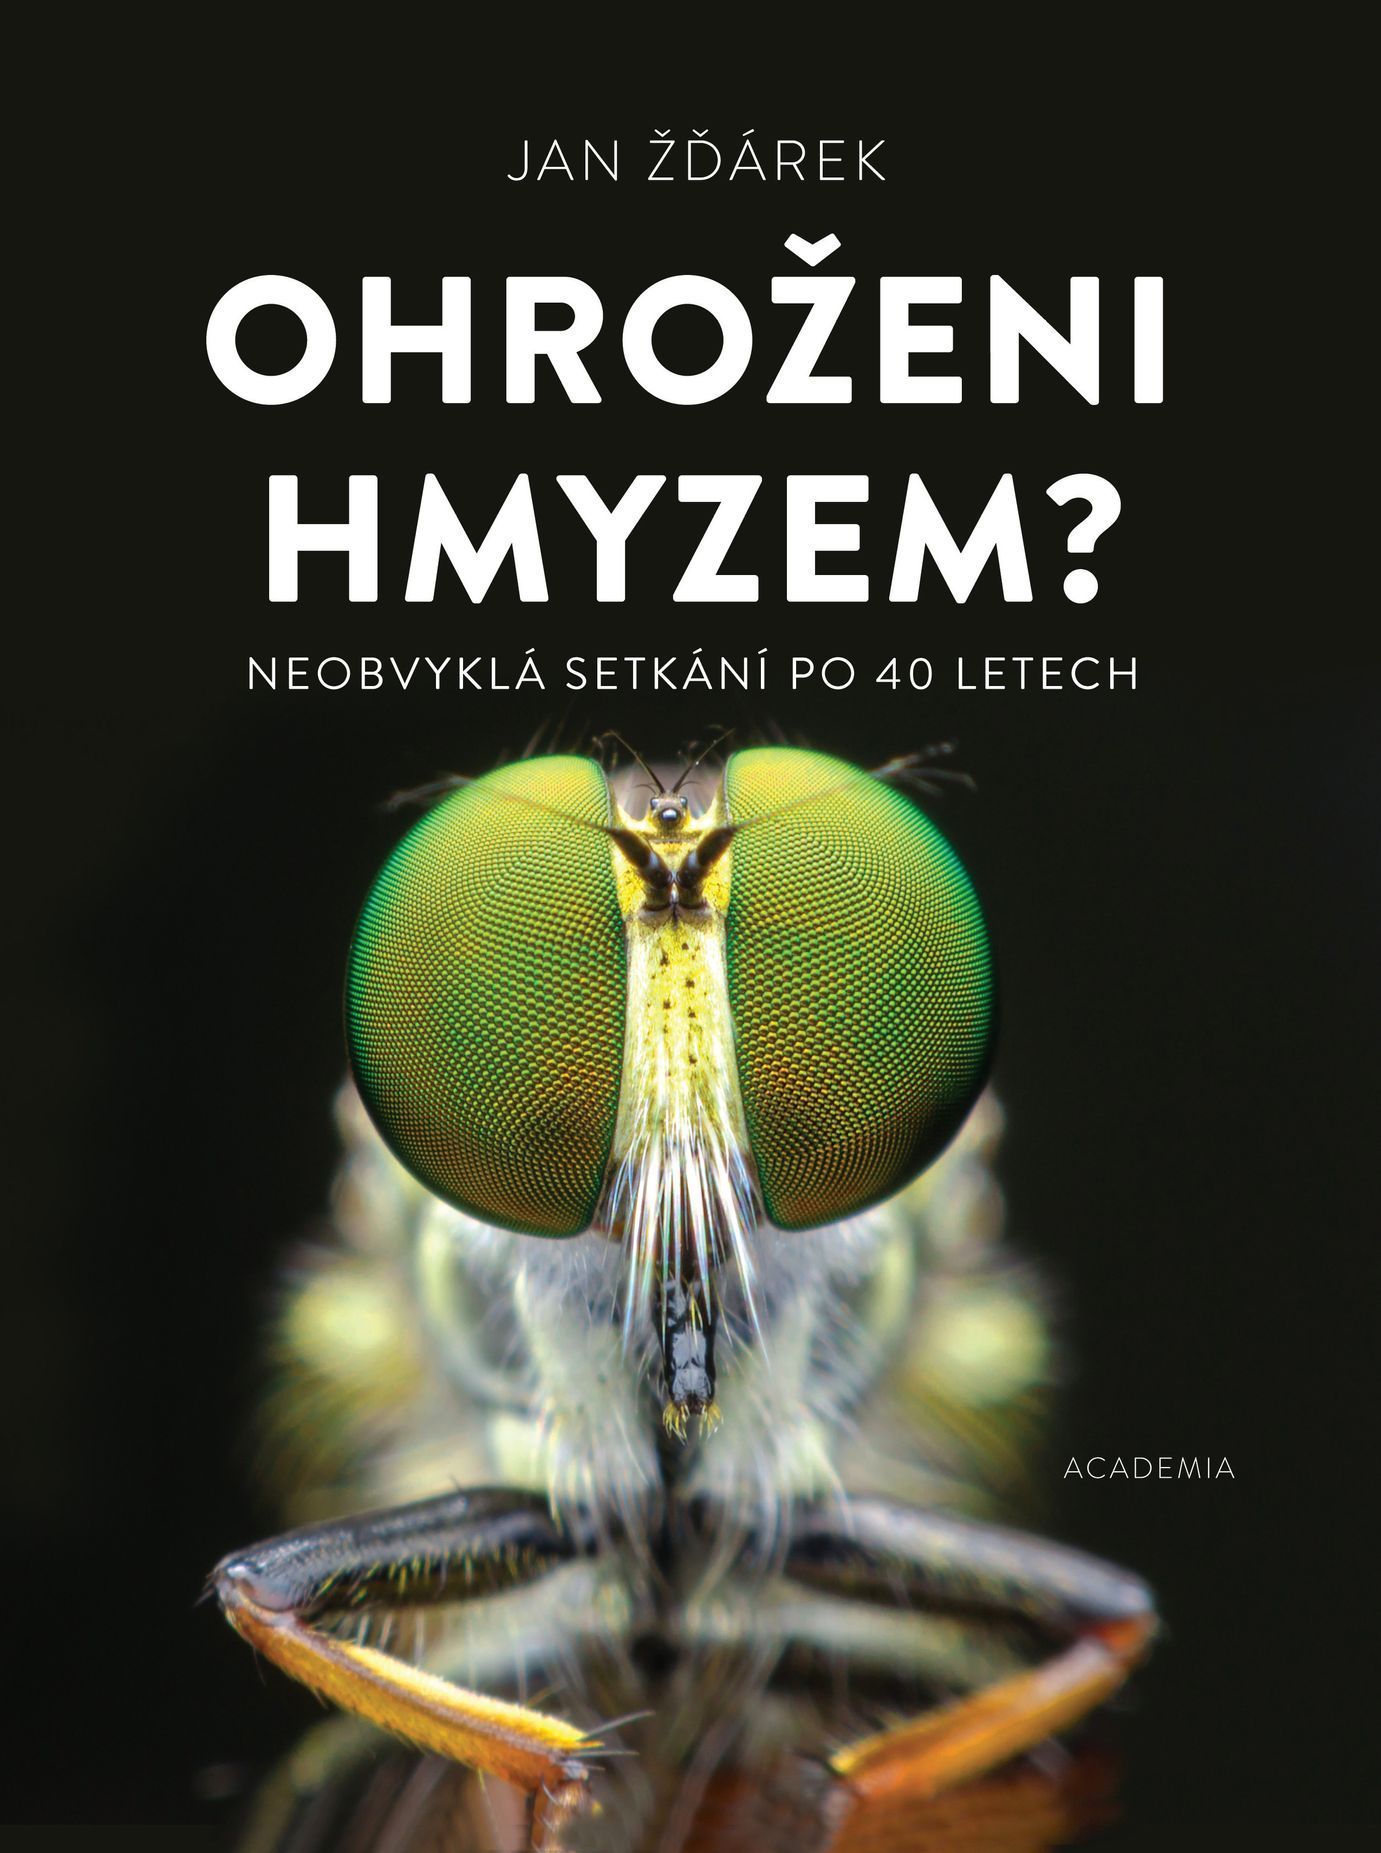 Ohroženi hmyzem, Jan Žďárek, entomolog, hmyz